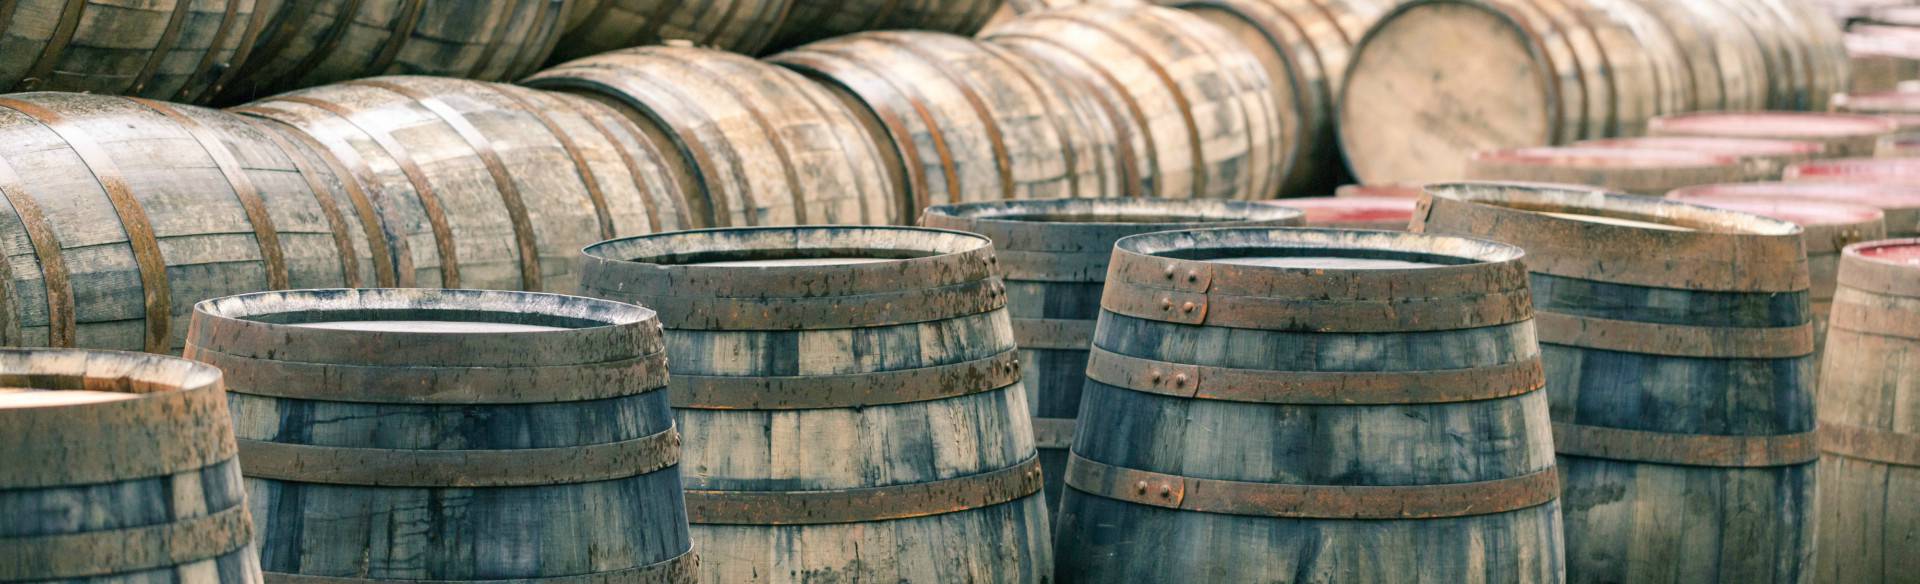 Whisky Barrels 